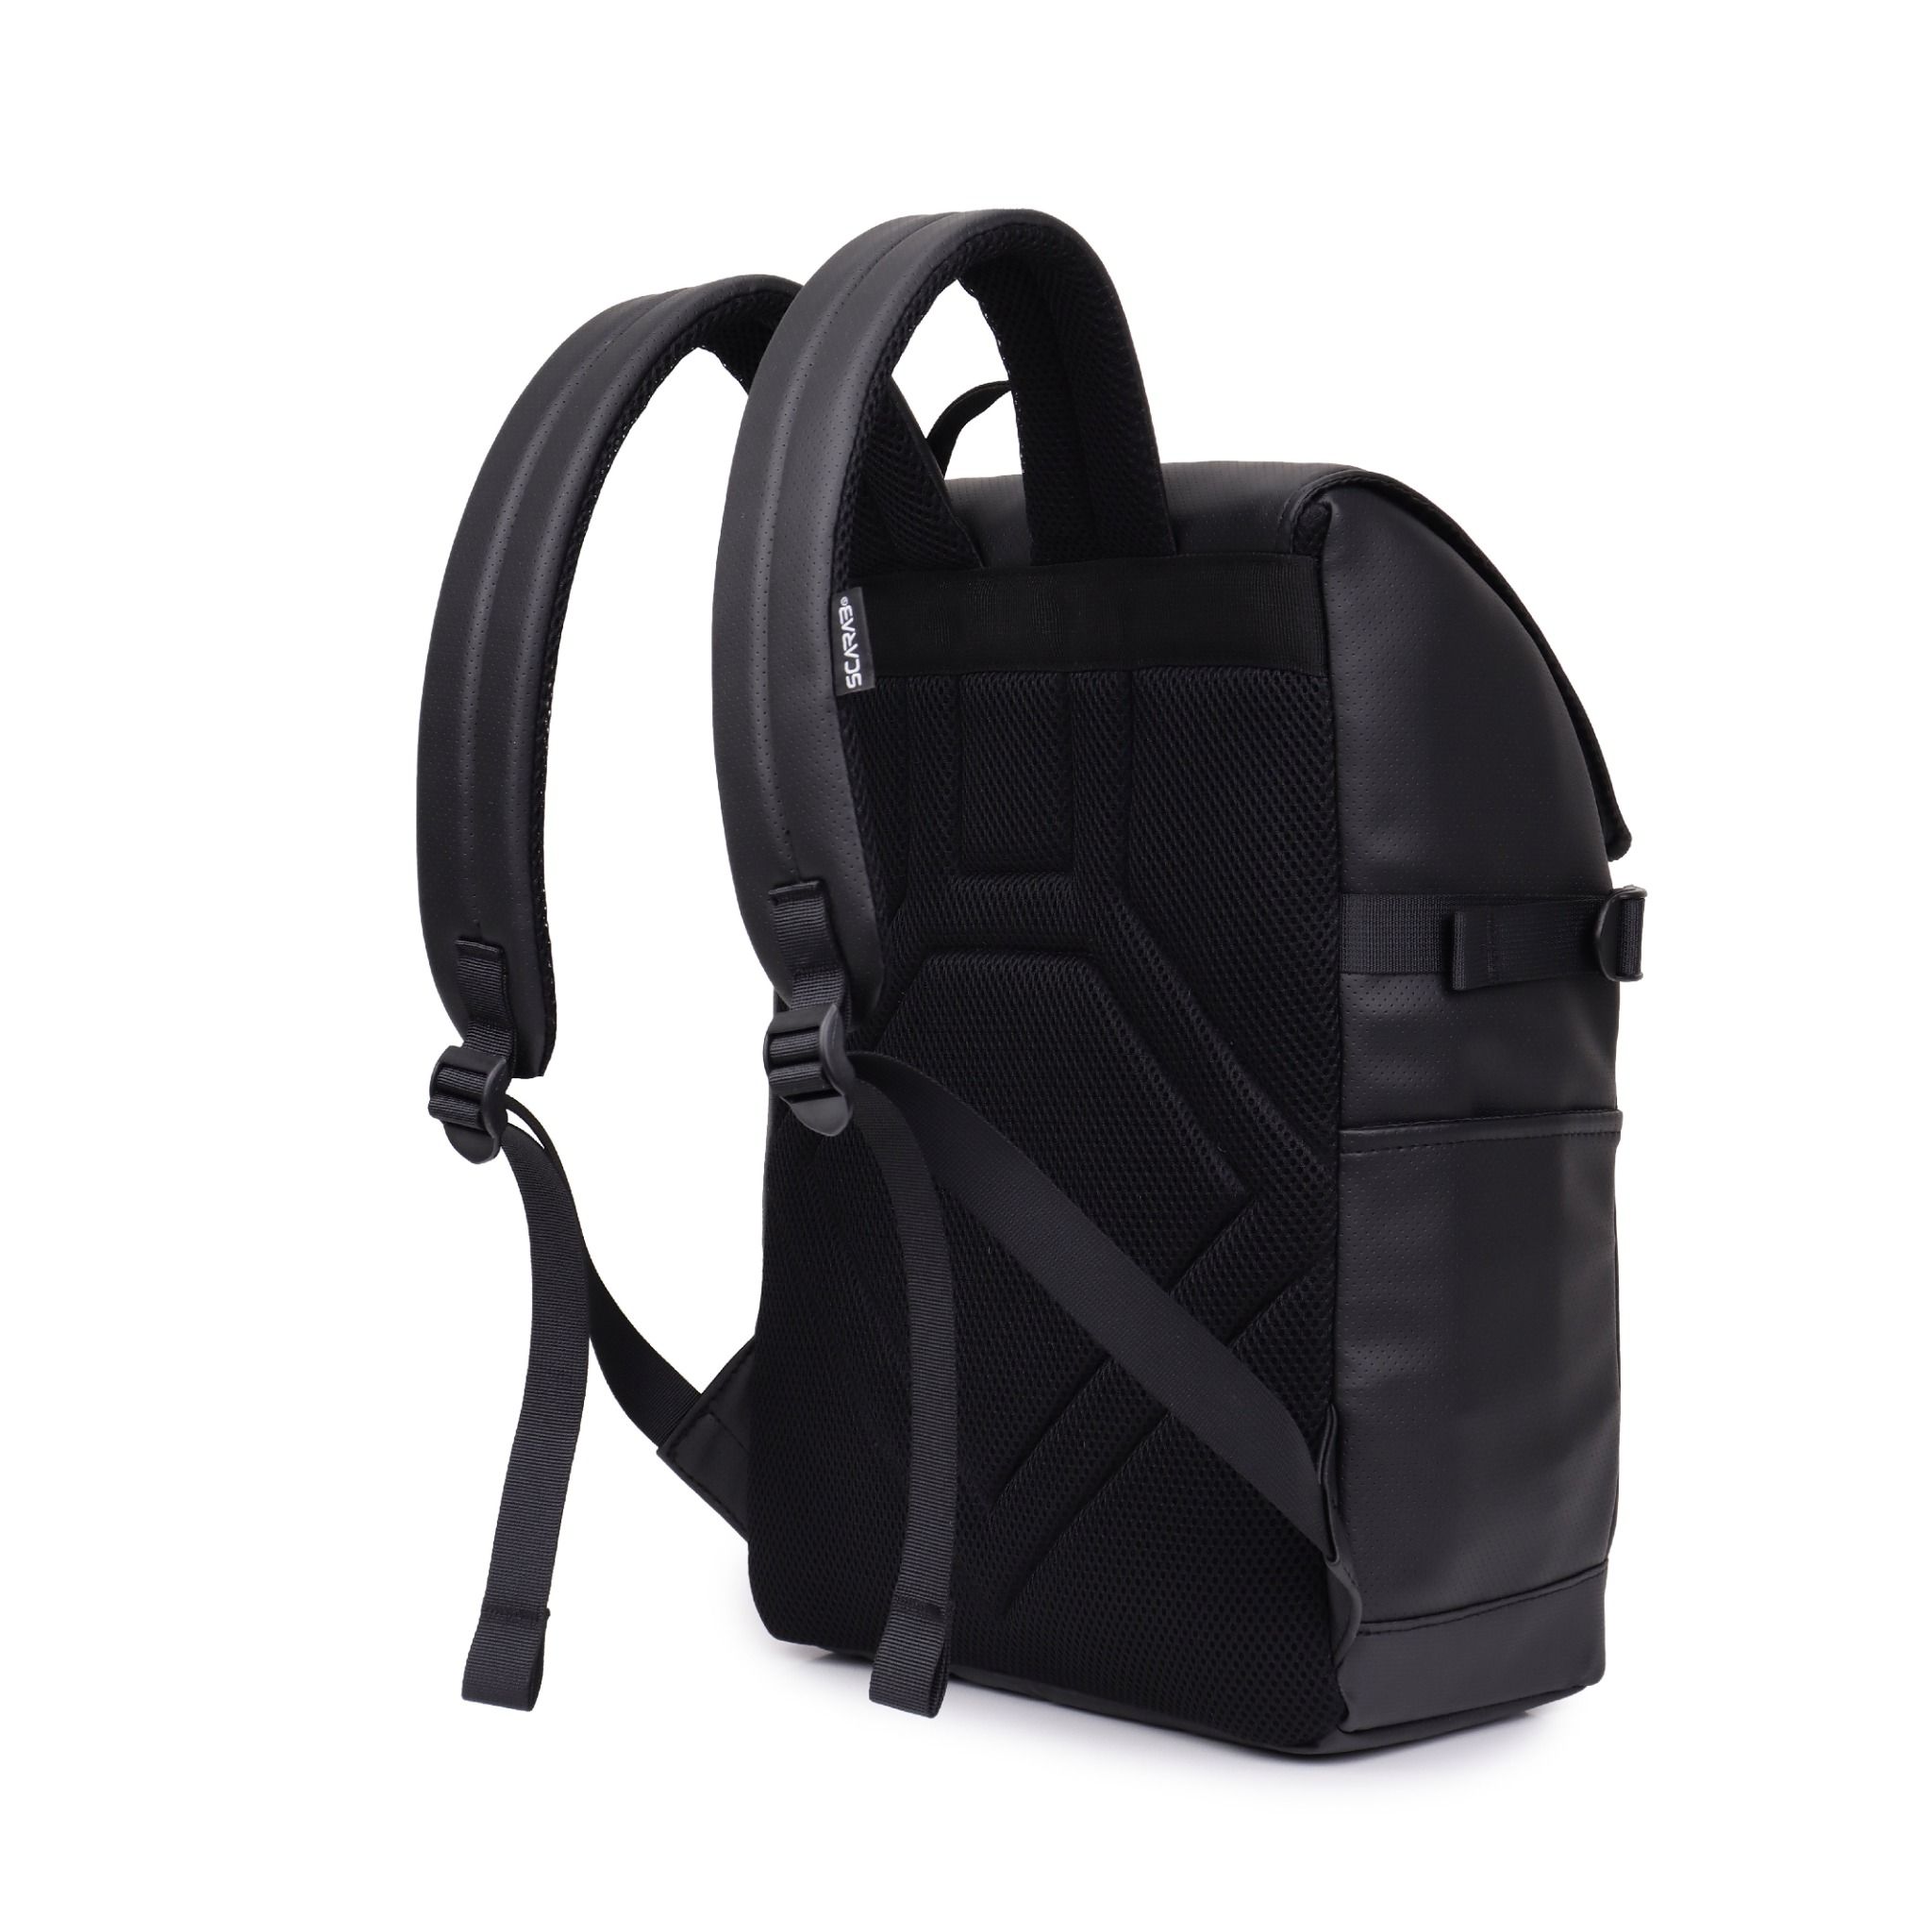  Urban Leather Backpack - Black 